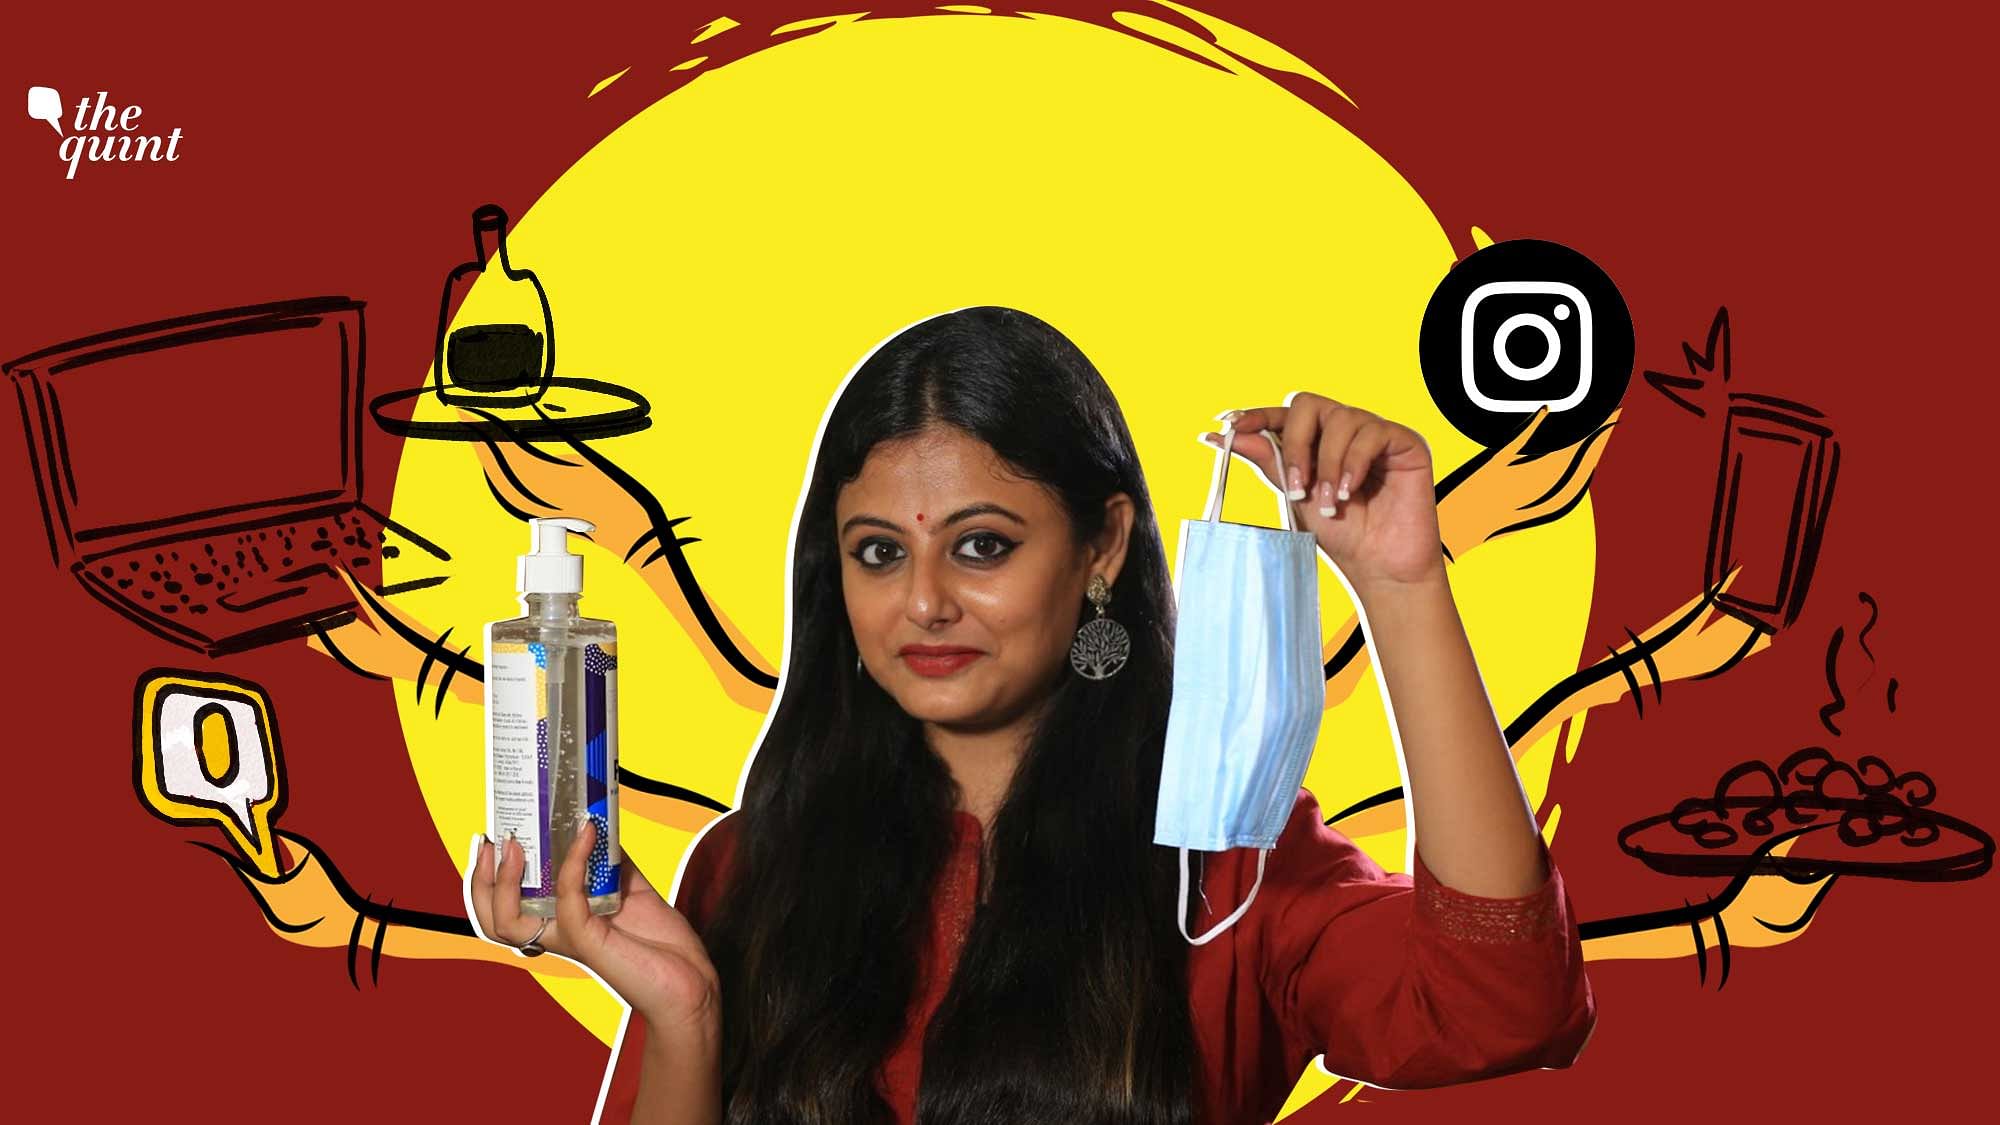 Durga Pujo 2020: 6 Ways To Have Corona-Free Fun This Year